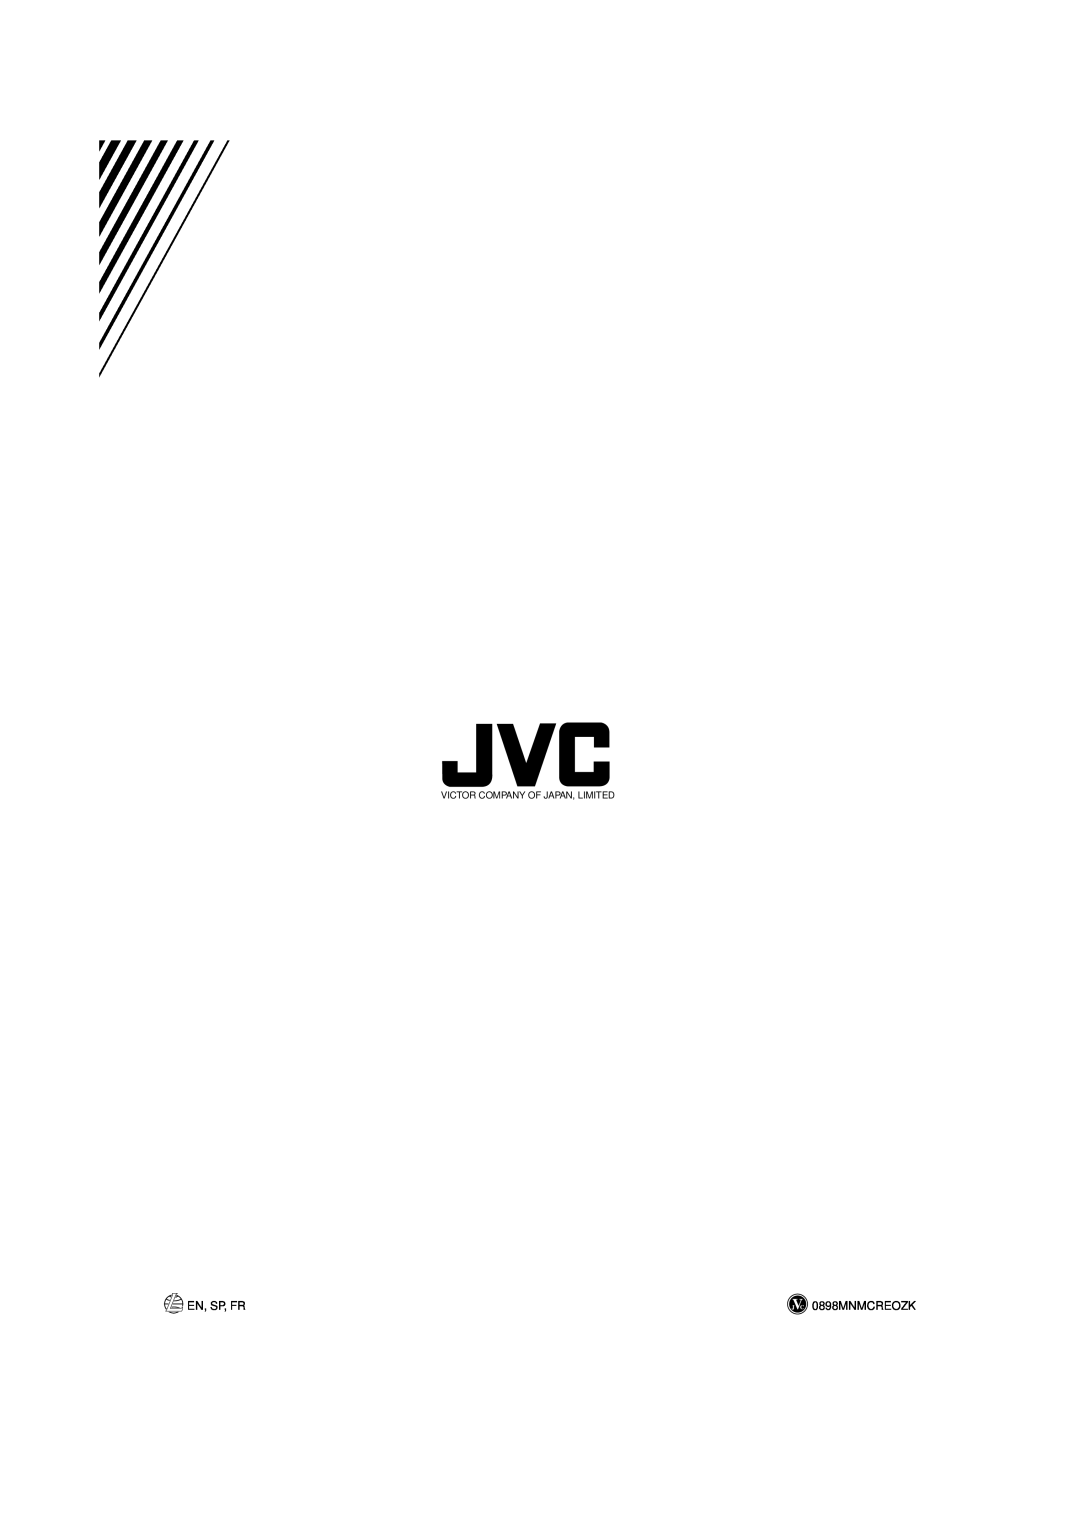 JVC FS-MD9000 manual En, Sp, Fr, 0898MNMCREOZK, Victor Company Of Japan, Limited 